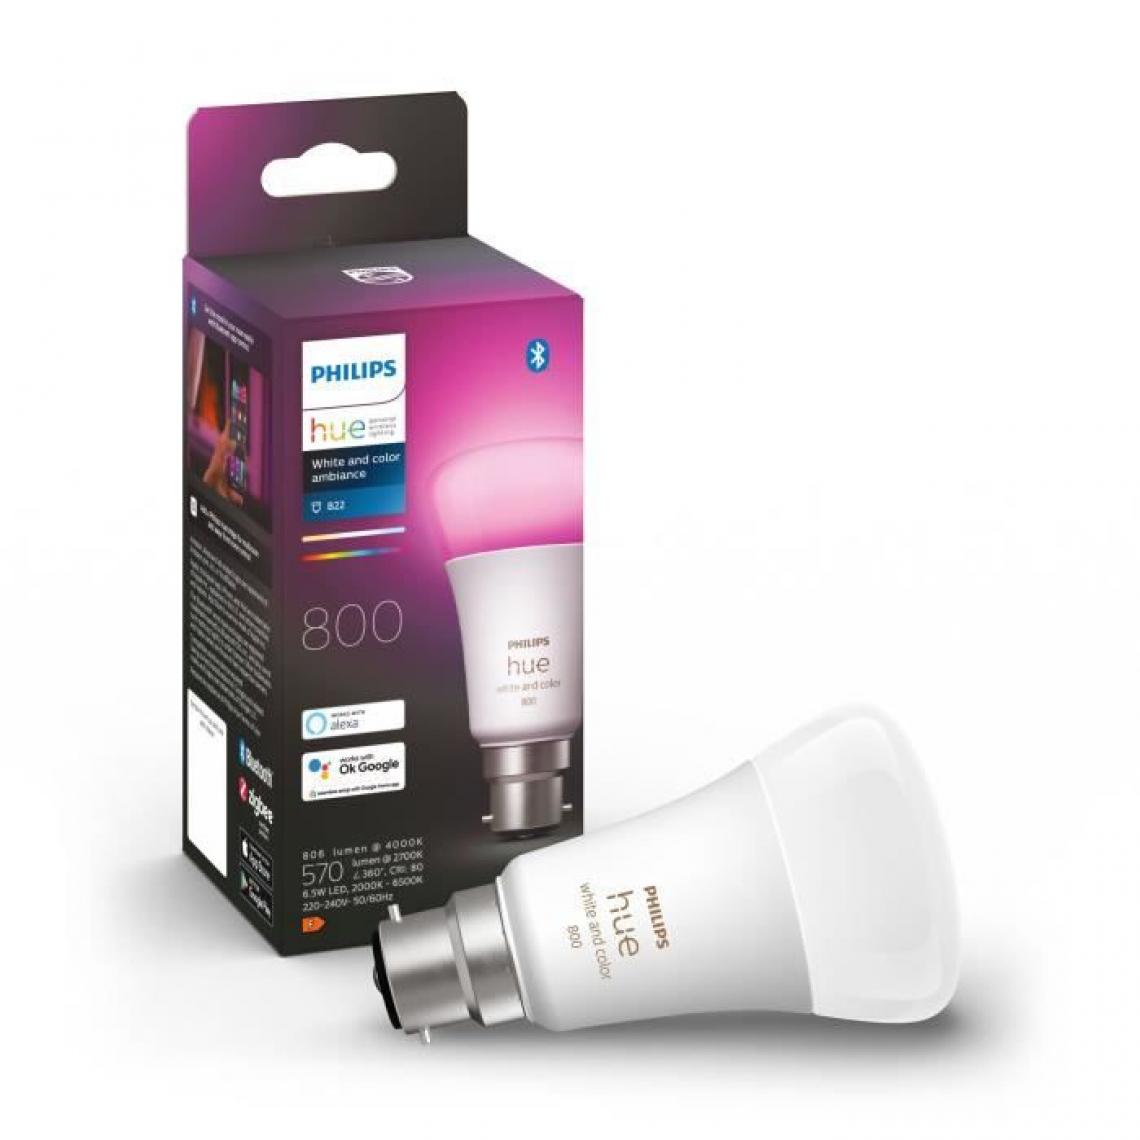 Philips Hue - PHILIPS Hue White and Color Ambiance - Ampoule LED connectée 10W - B22 - Compatible Bluetooth - Lampe connectée